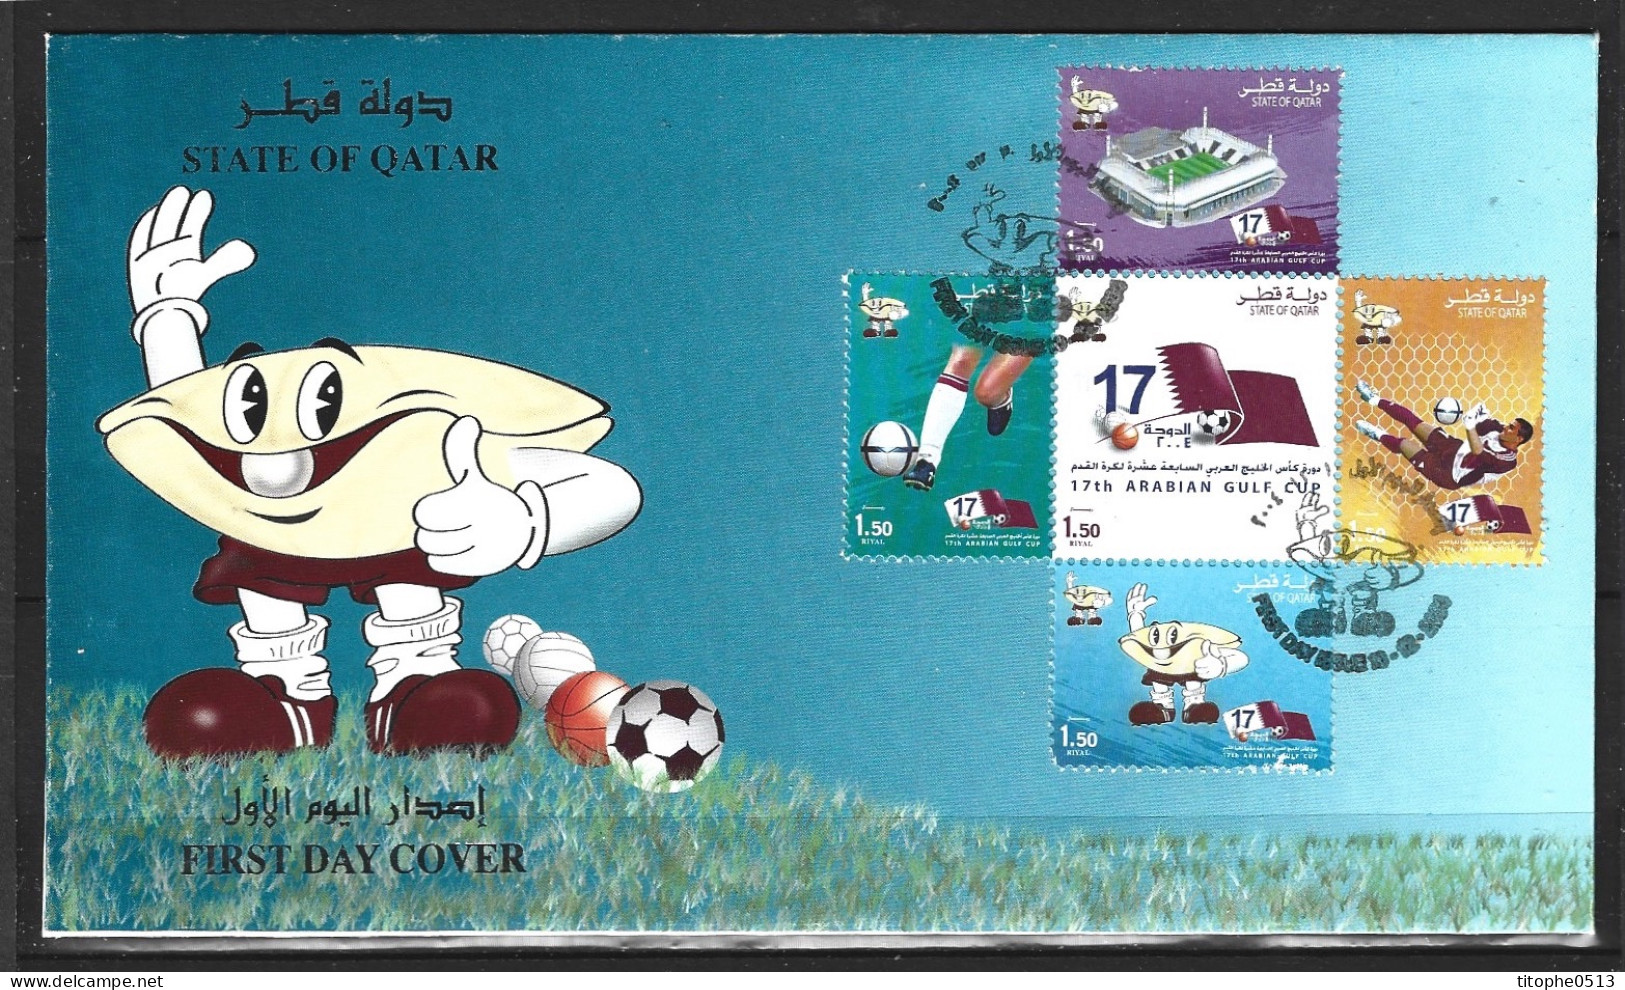 QATAR. N°865-9 De 2004 Sur Enveloppe 1er Jour (FDC). Coupe Du Golf Arabe. - Qatar